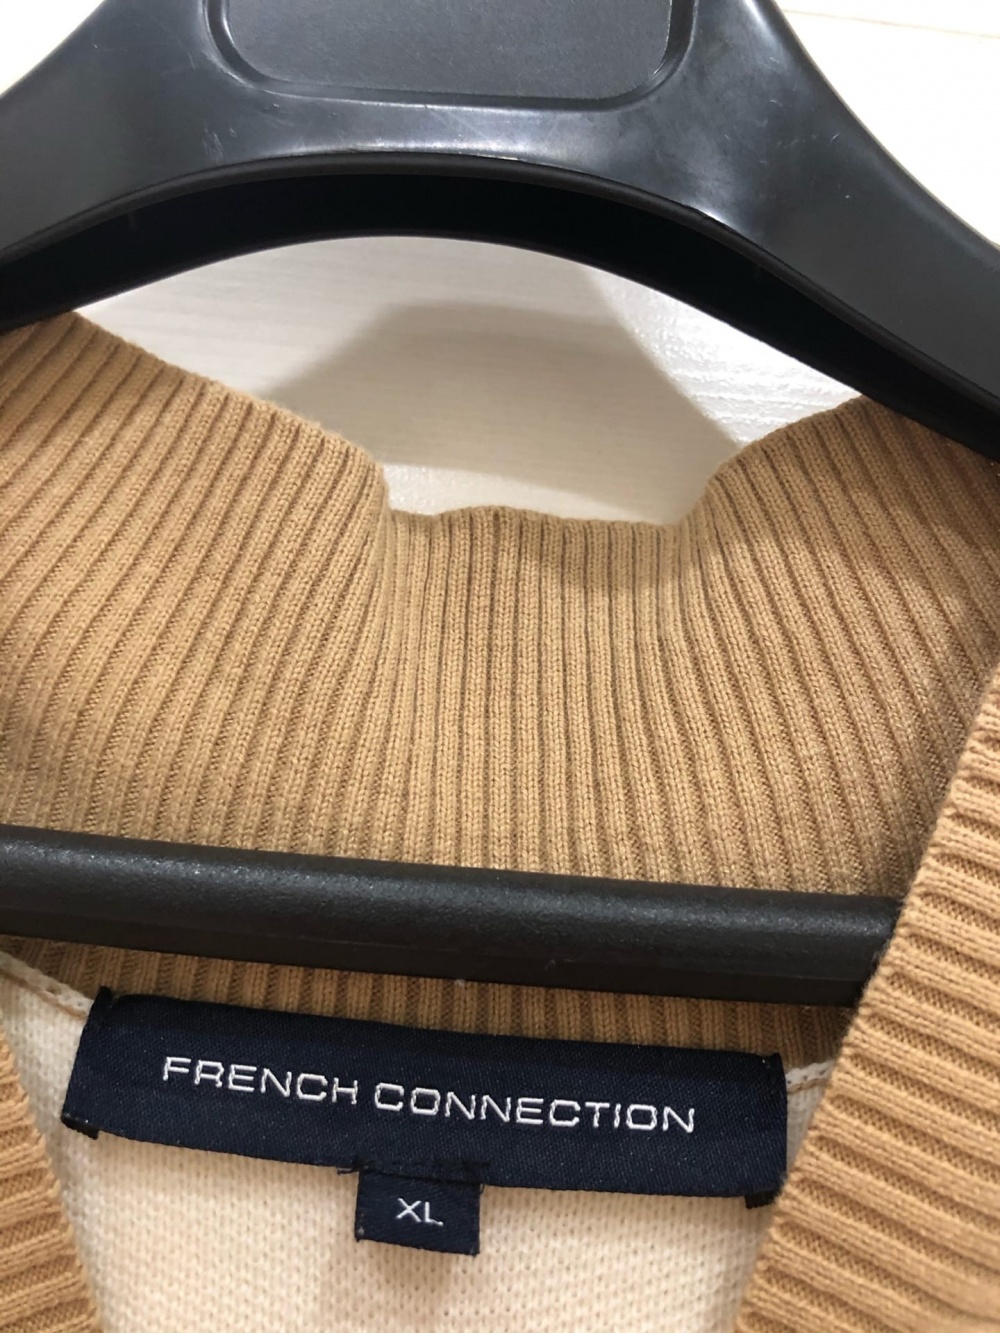 Джемпер-кейп  French Connection.Размер XL.One-size